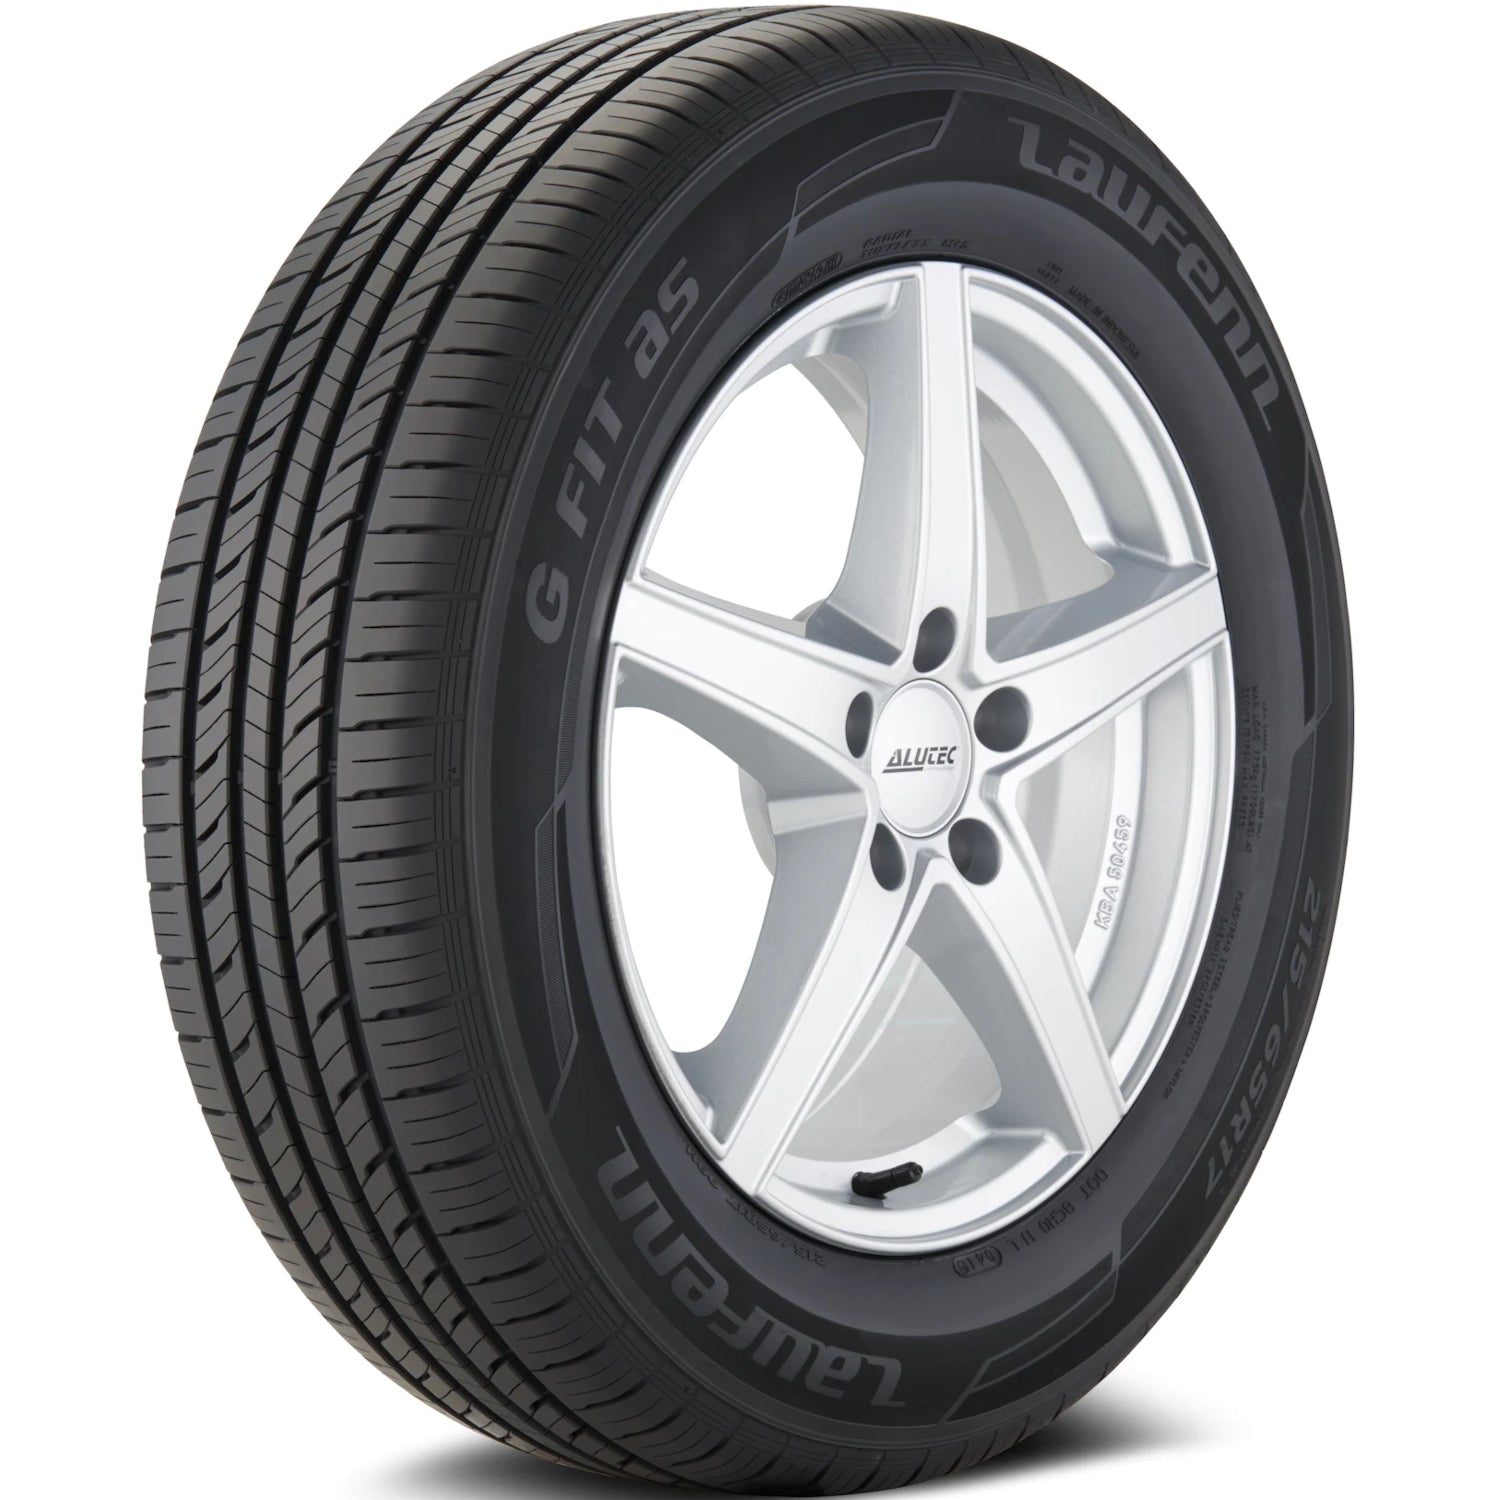 LAUFENN G FIT AS 195/60R15 (24.2X7.7R 15) Tires